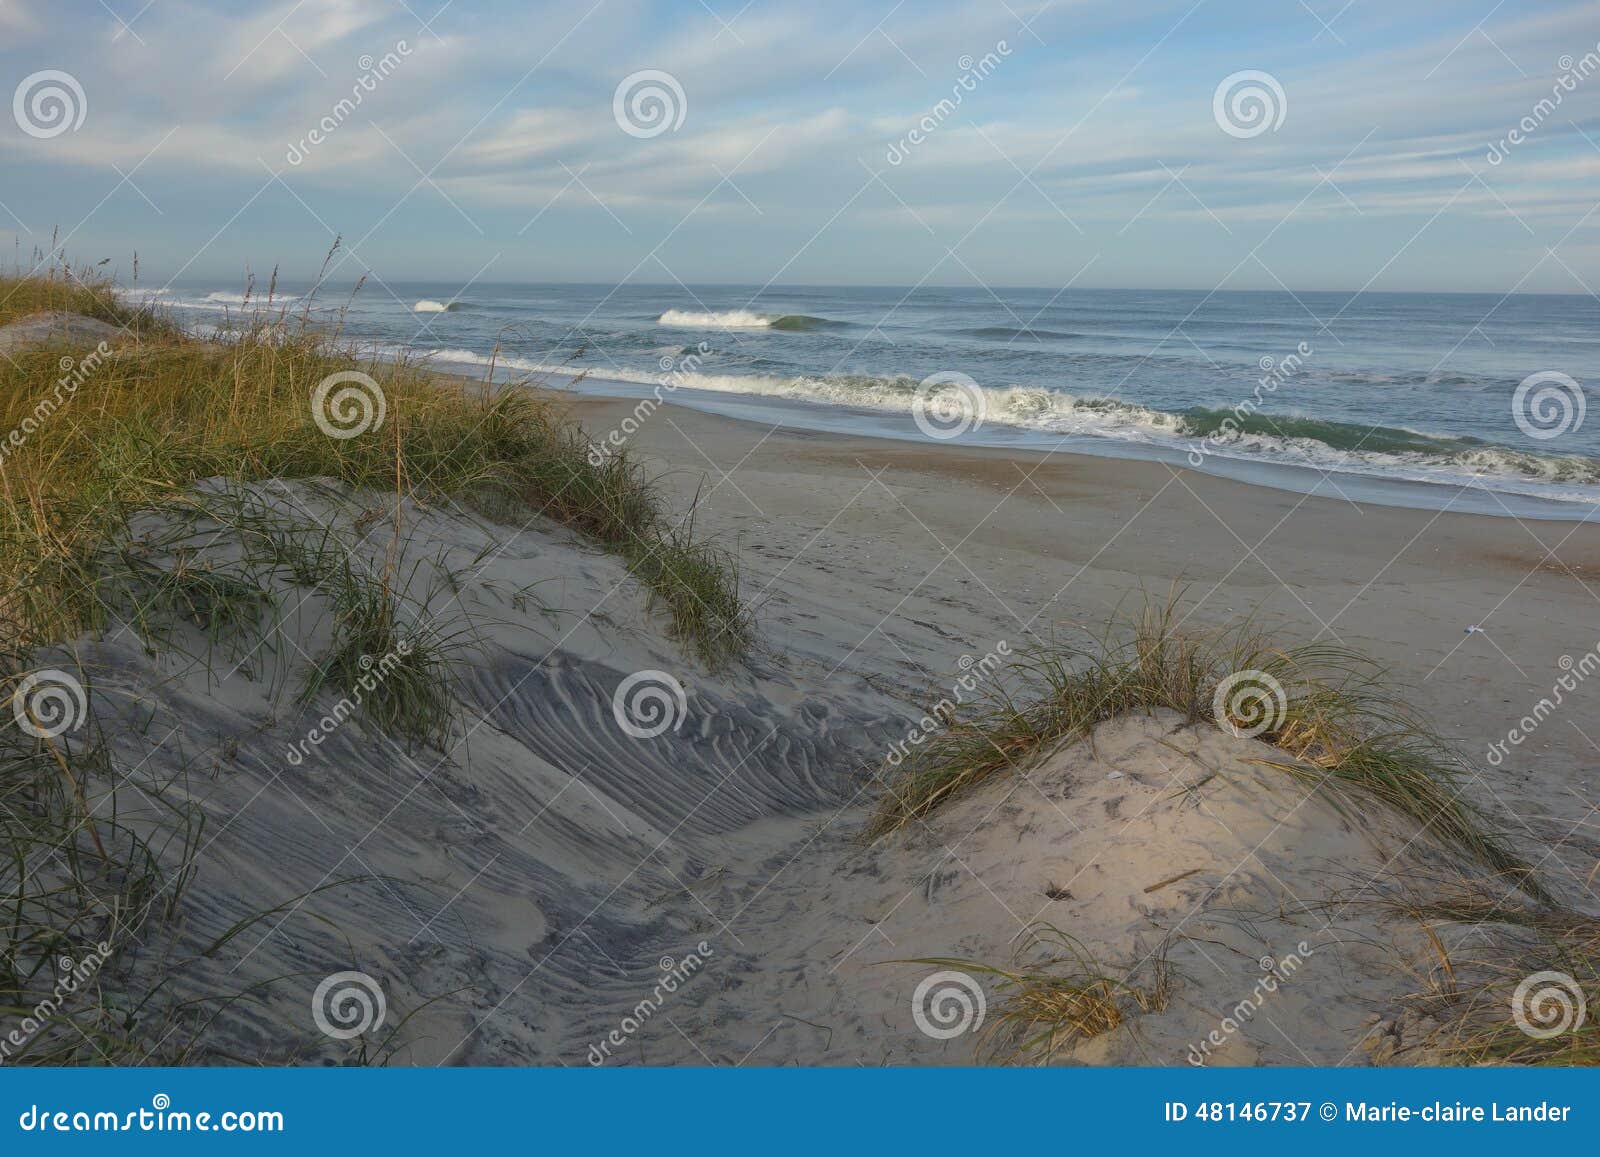 north carolina deserted beaches from sand dunes